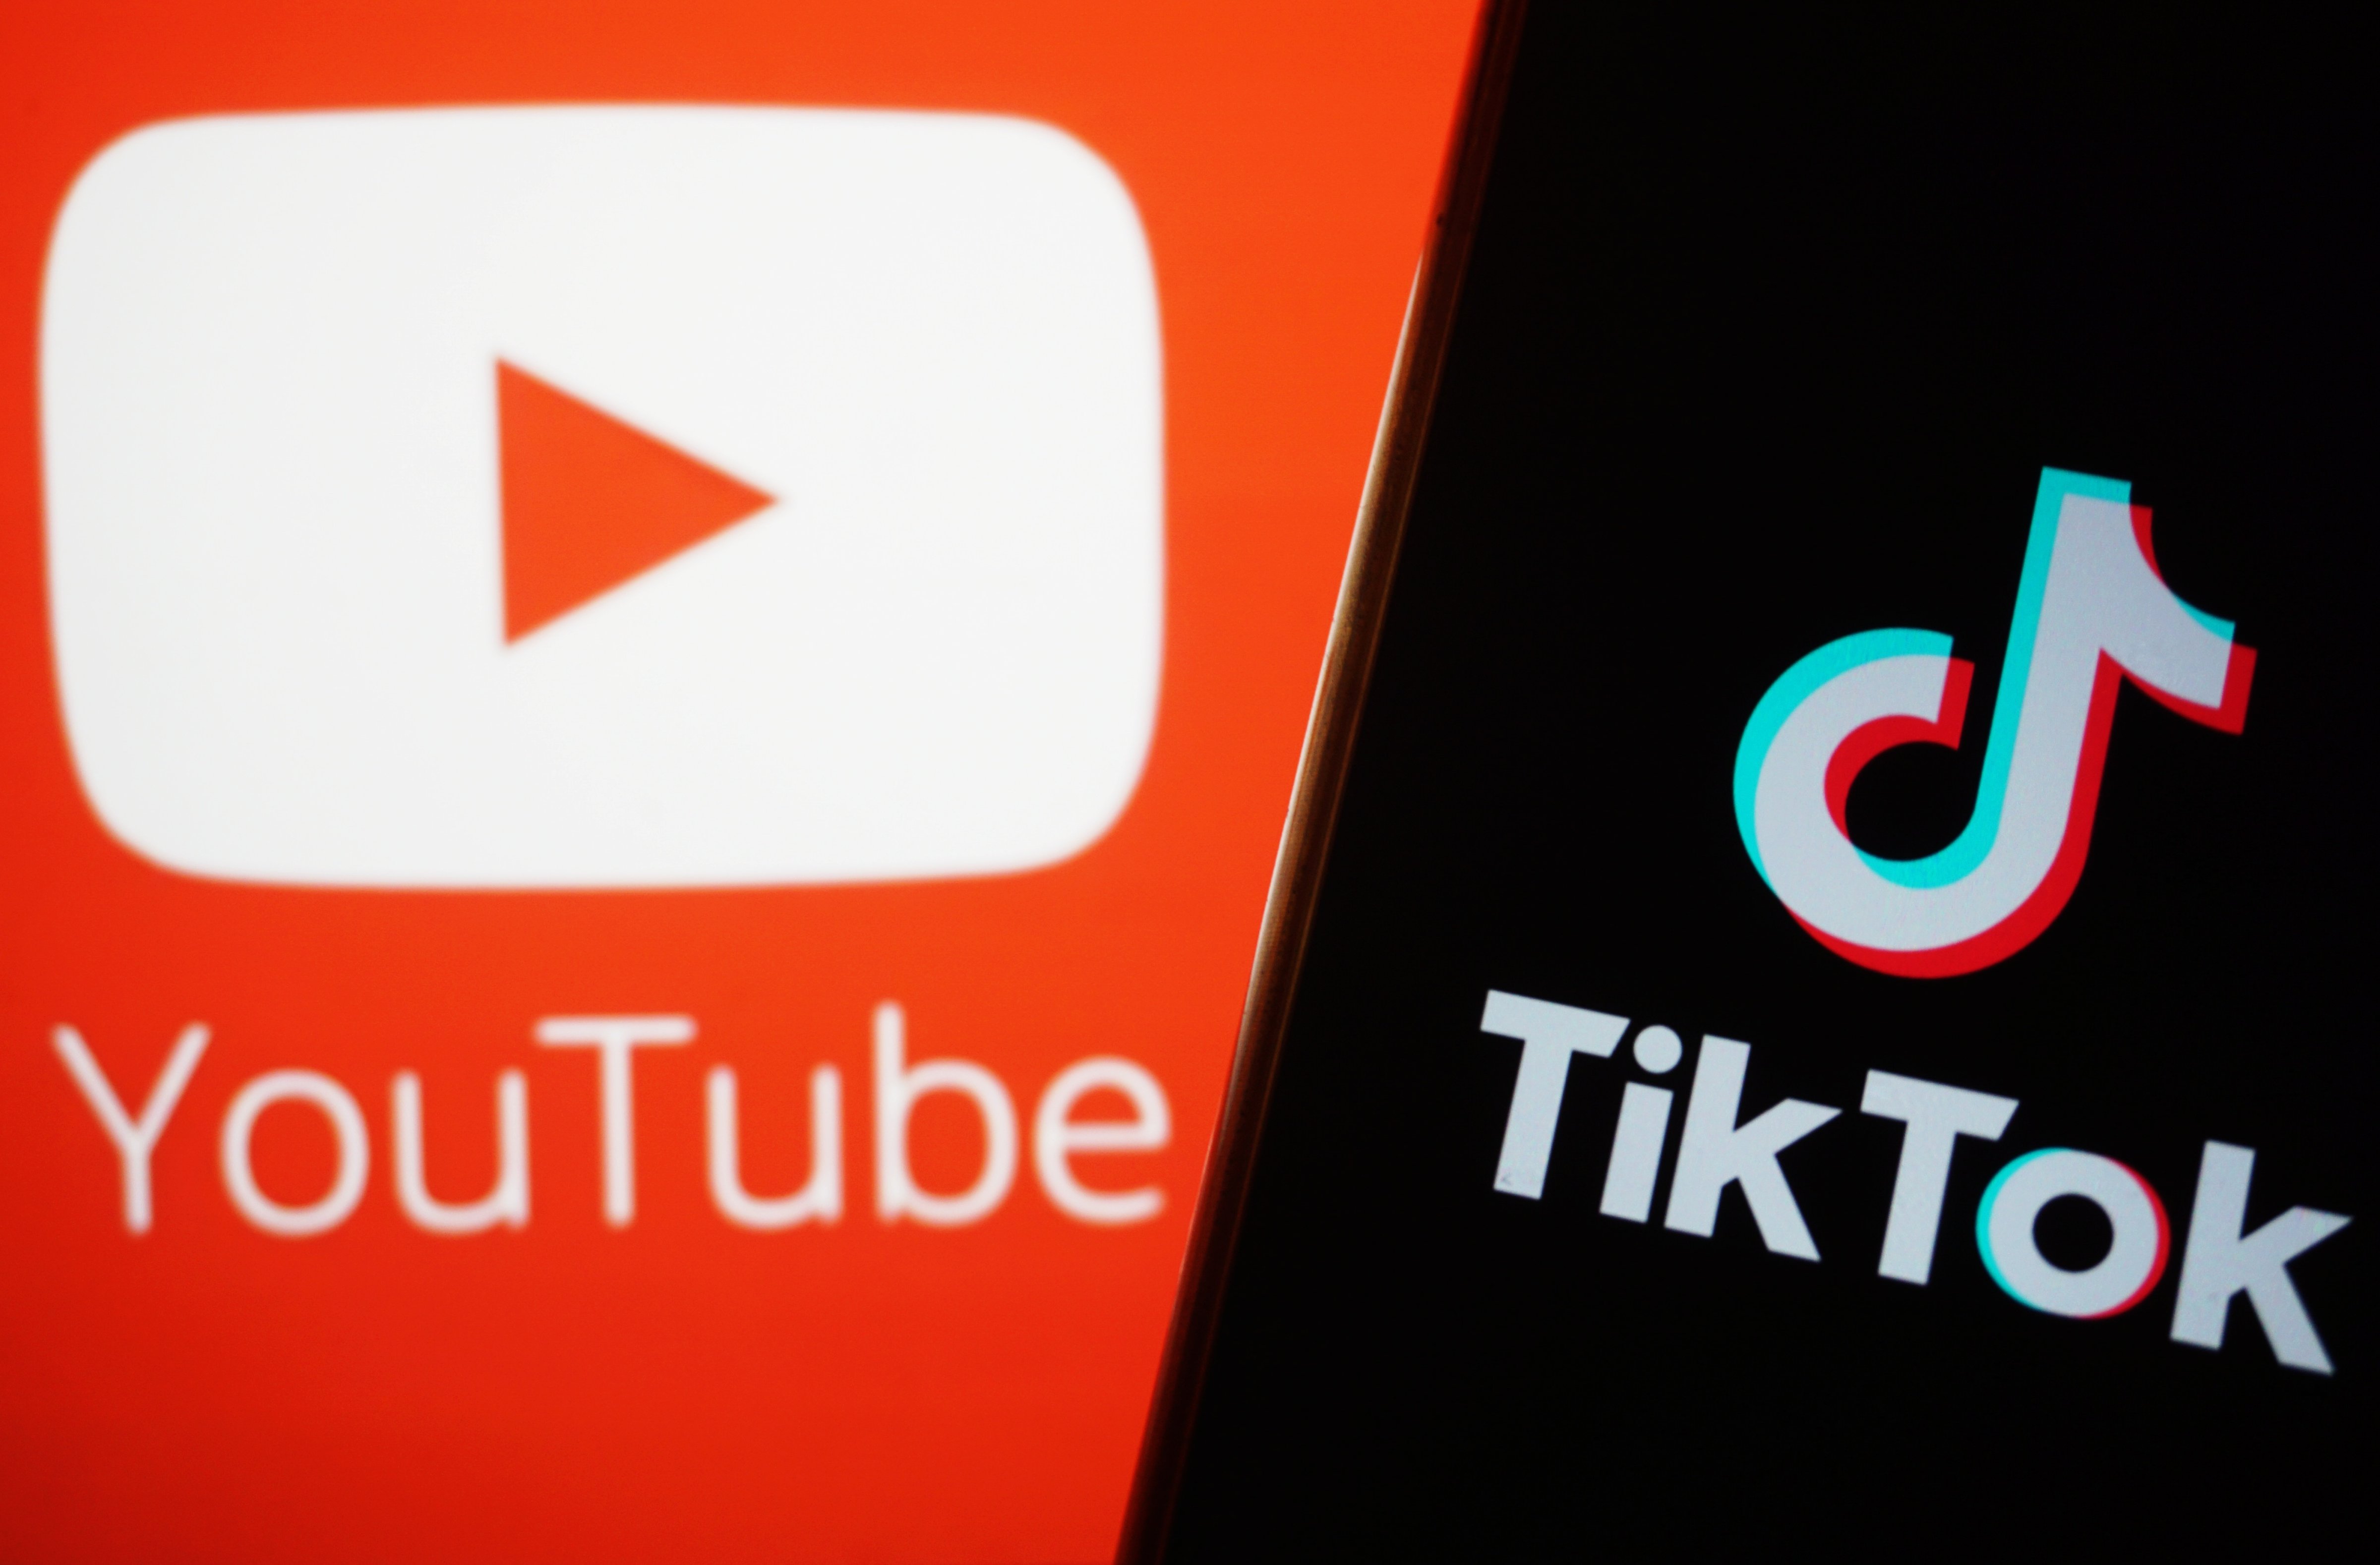 The YouTube and TikTok logos (CFOTO/Future Publishing—Getty Images)